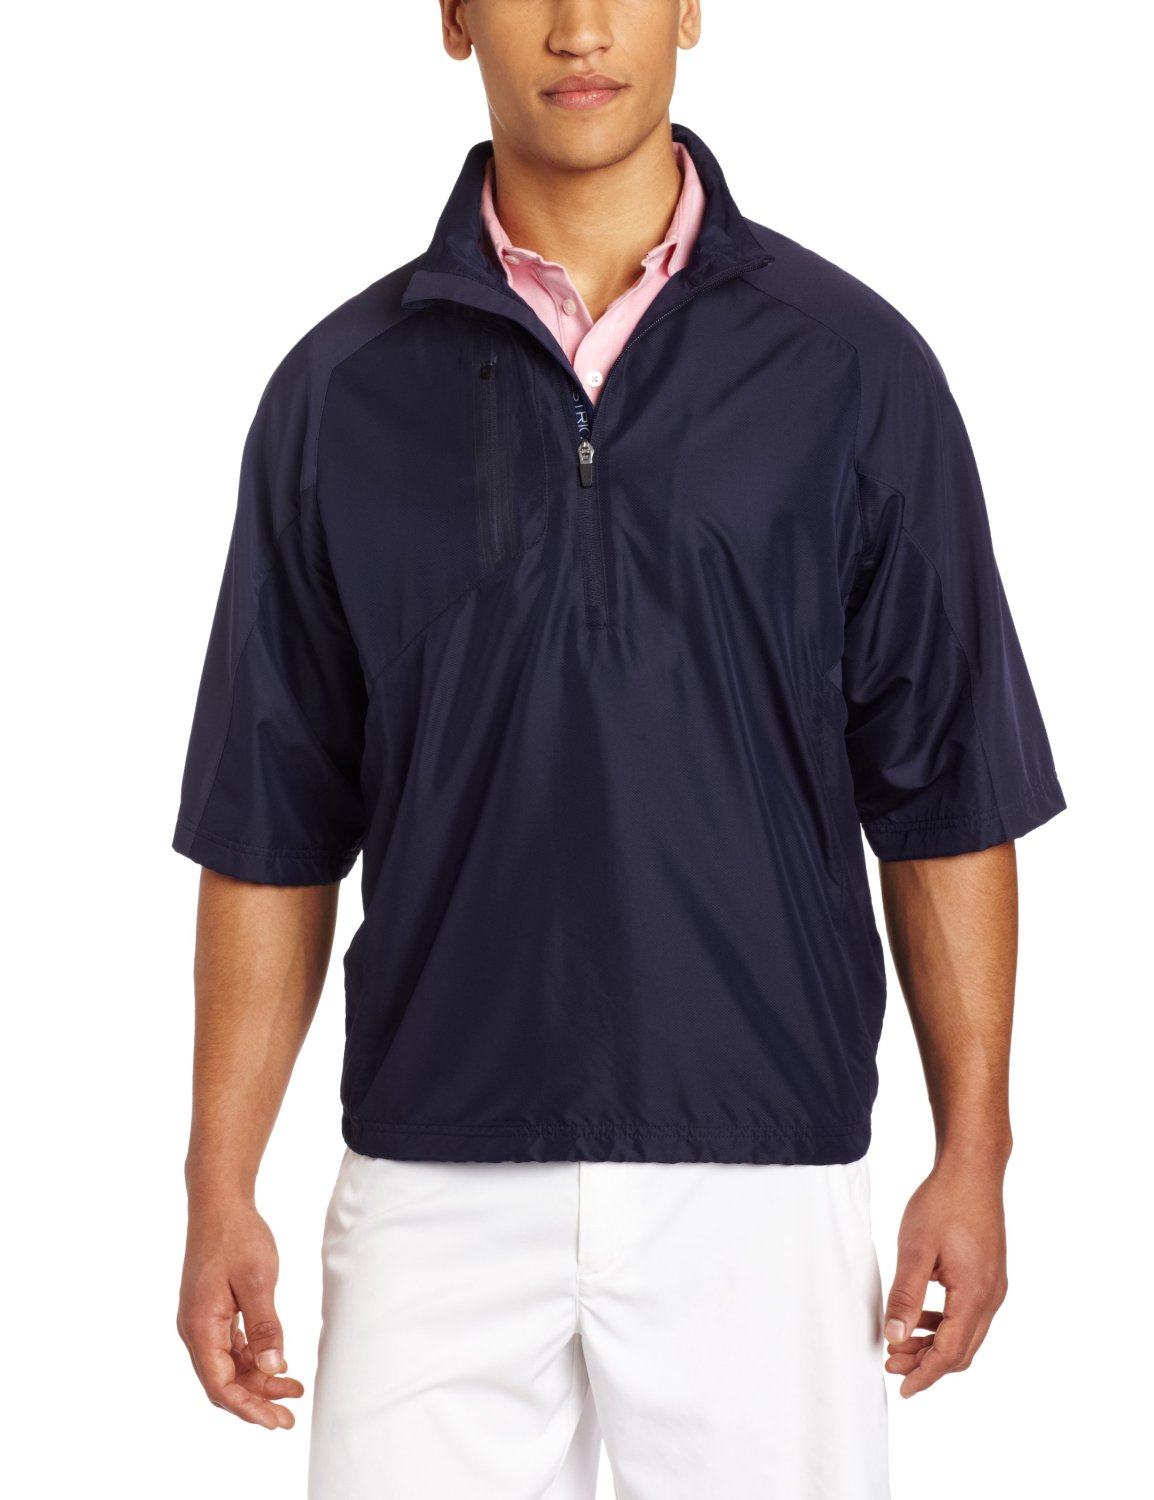 Mens Zero Restriction Mix Half Sleeve Golf Pullovers